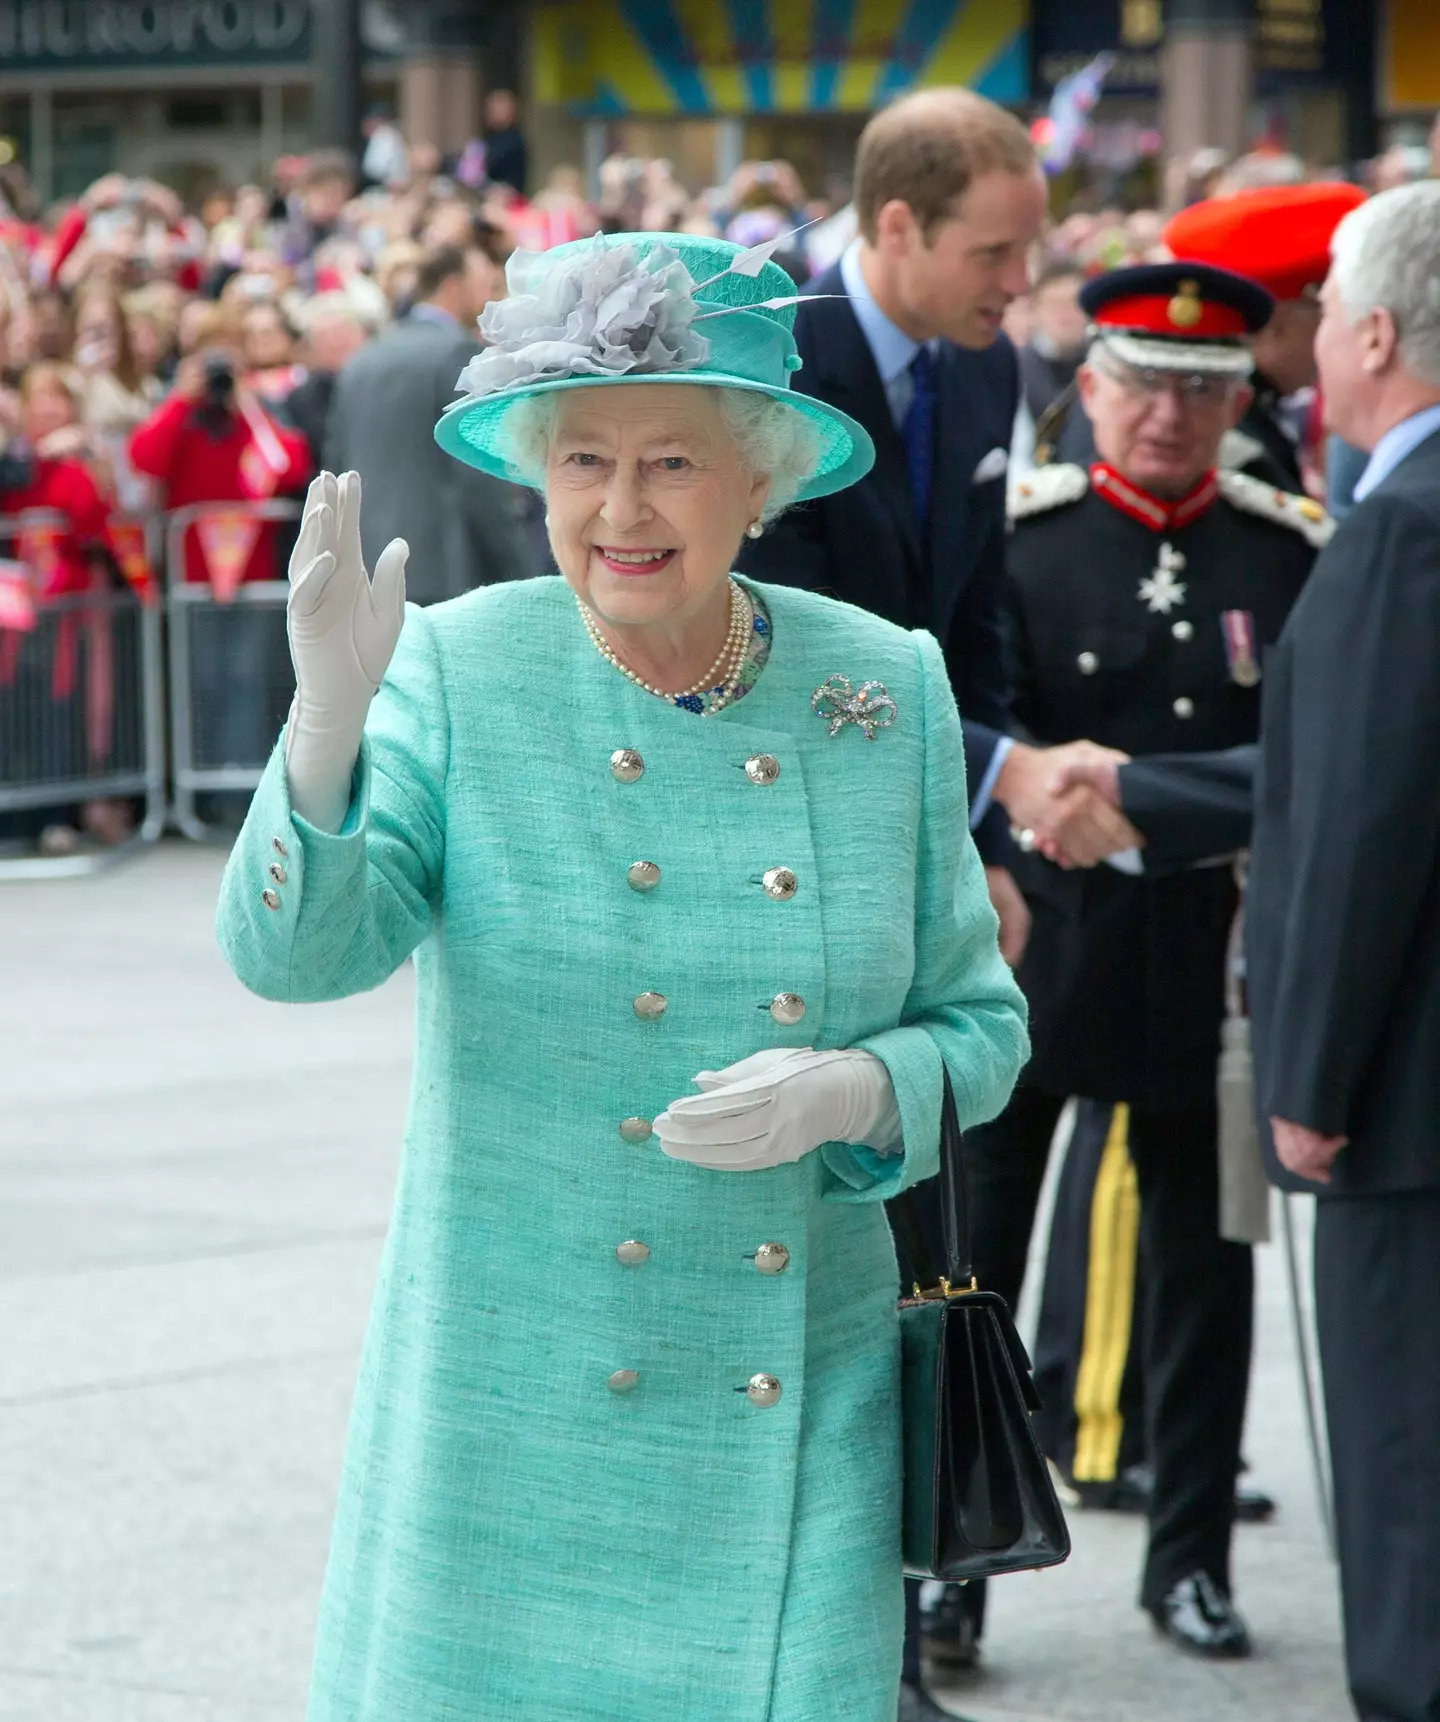 It has been announced that Queen Elizabeth II has died aged 96.